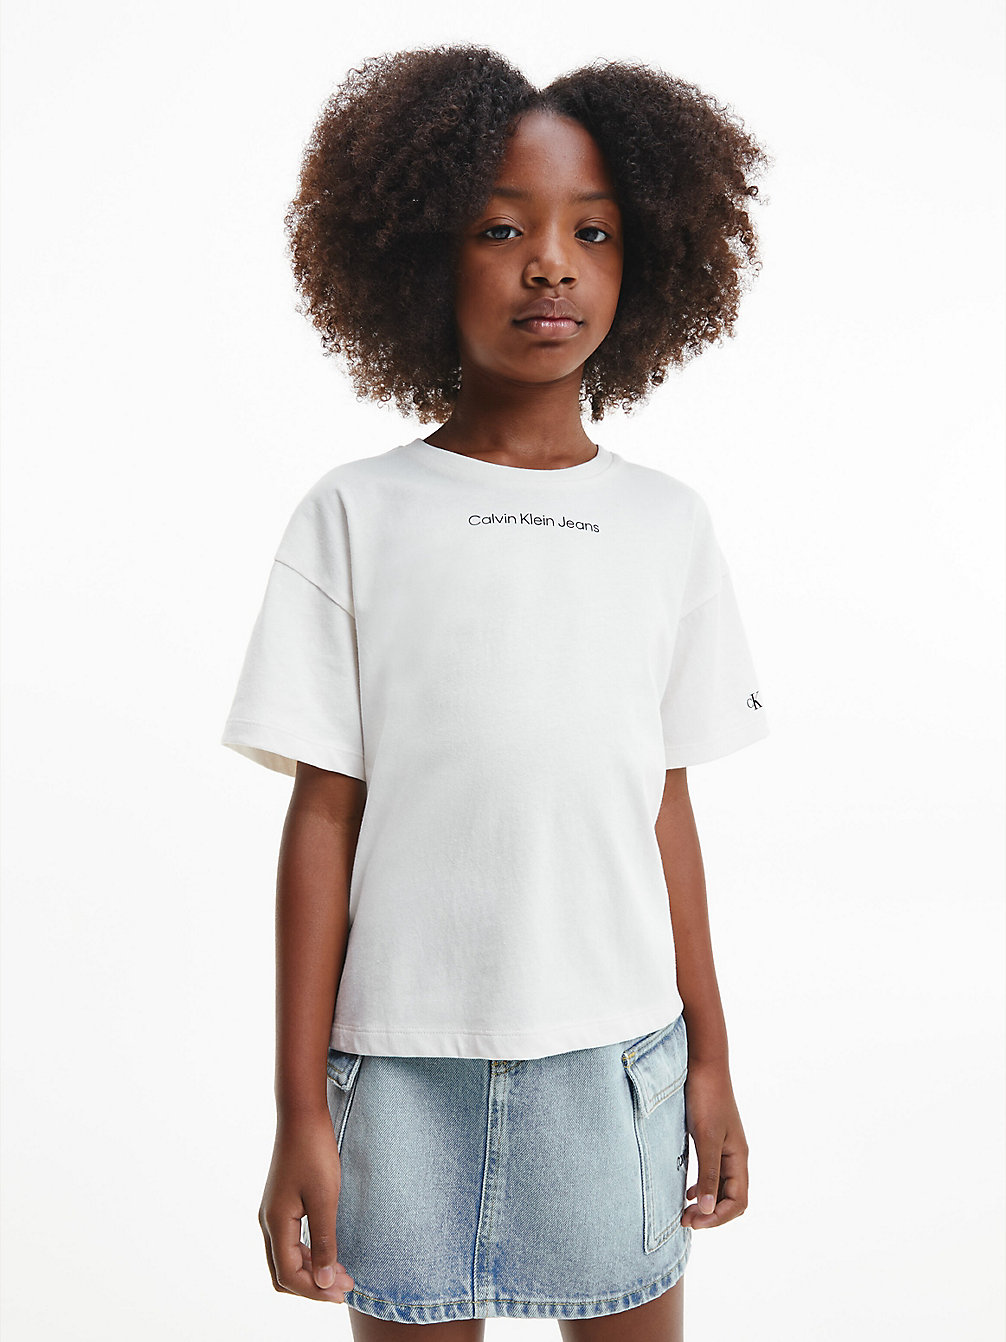 IVORY Organic Cotton Boxy T-Shirt undefined girls Calvin Klein